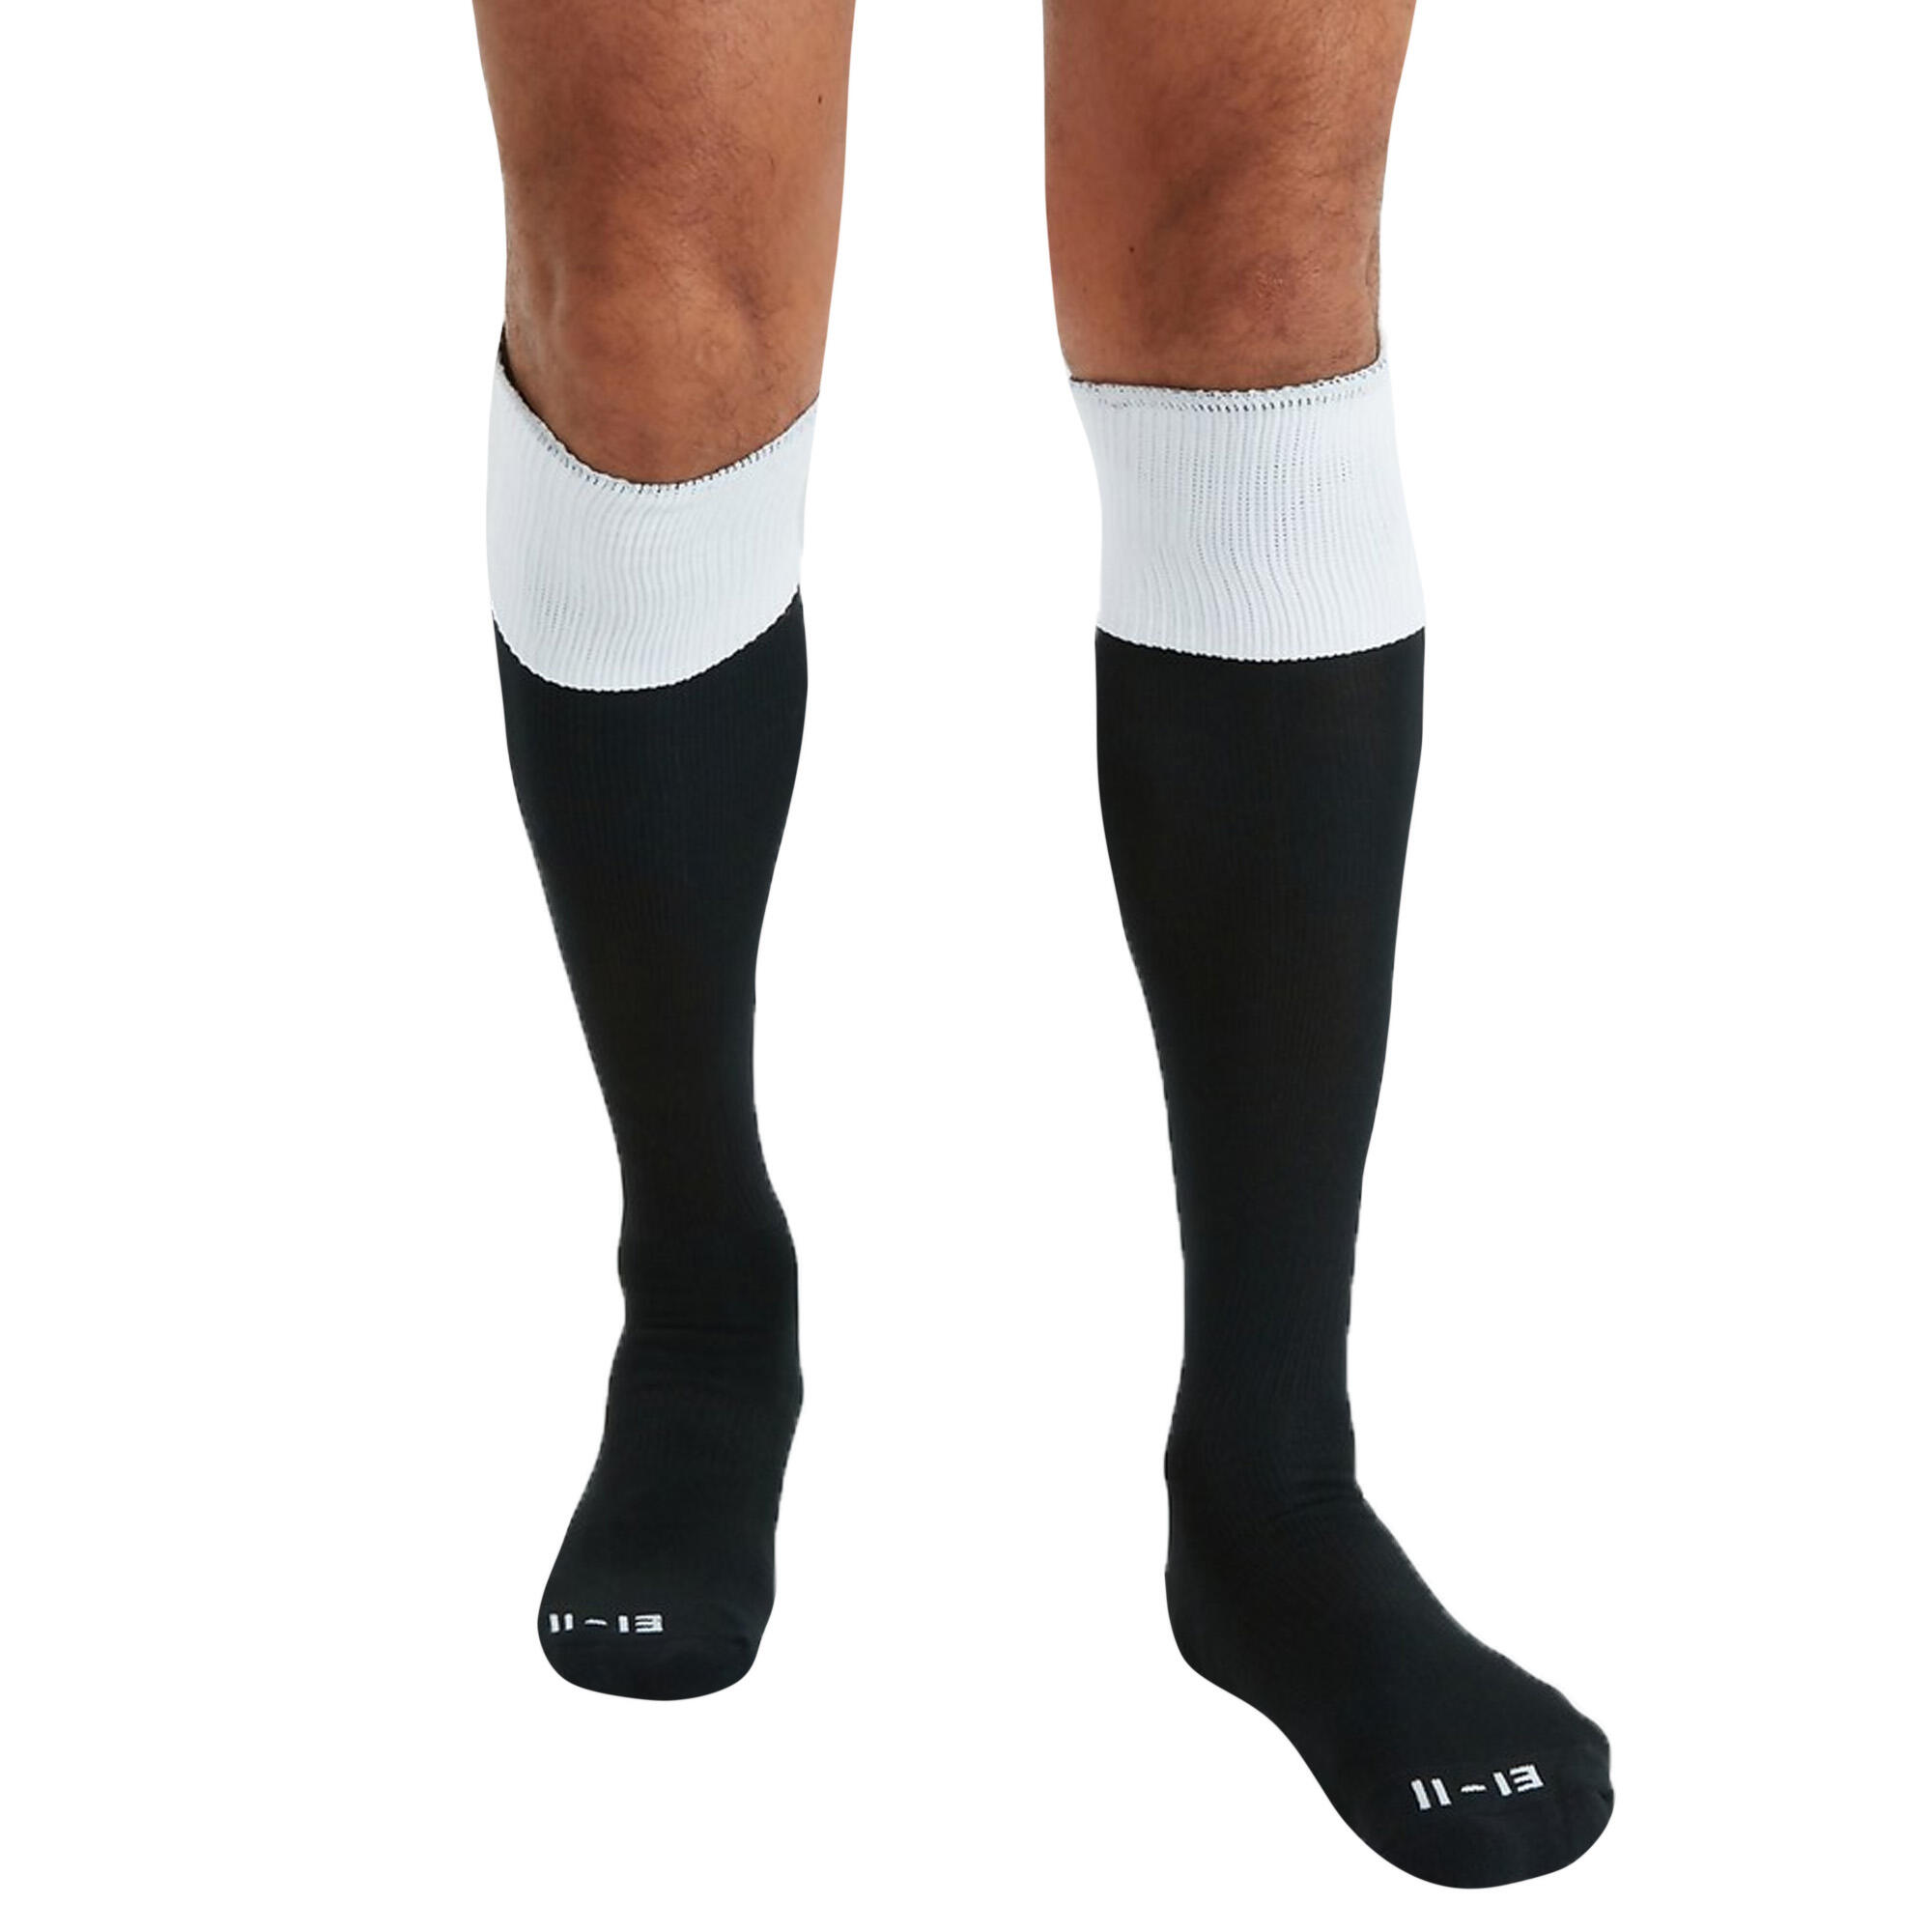 CANTERBURY Mens Team Rugby Socks (Black/White)